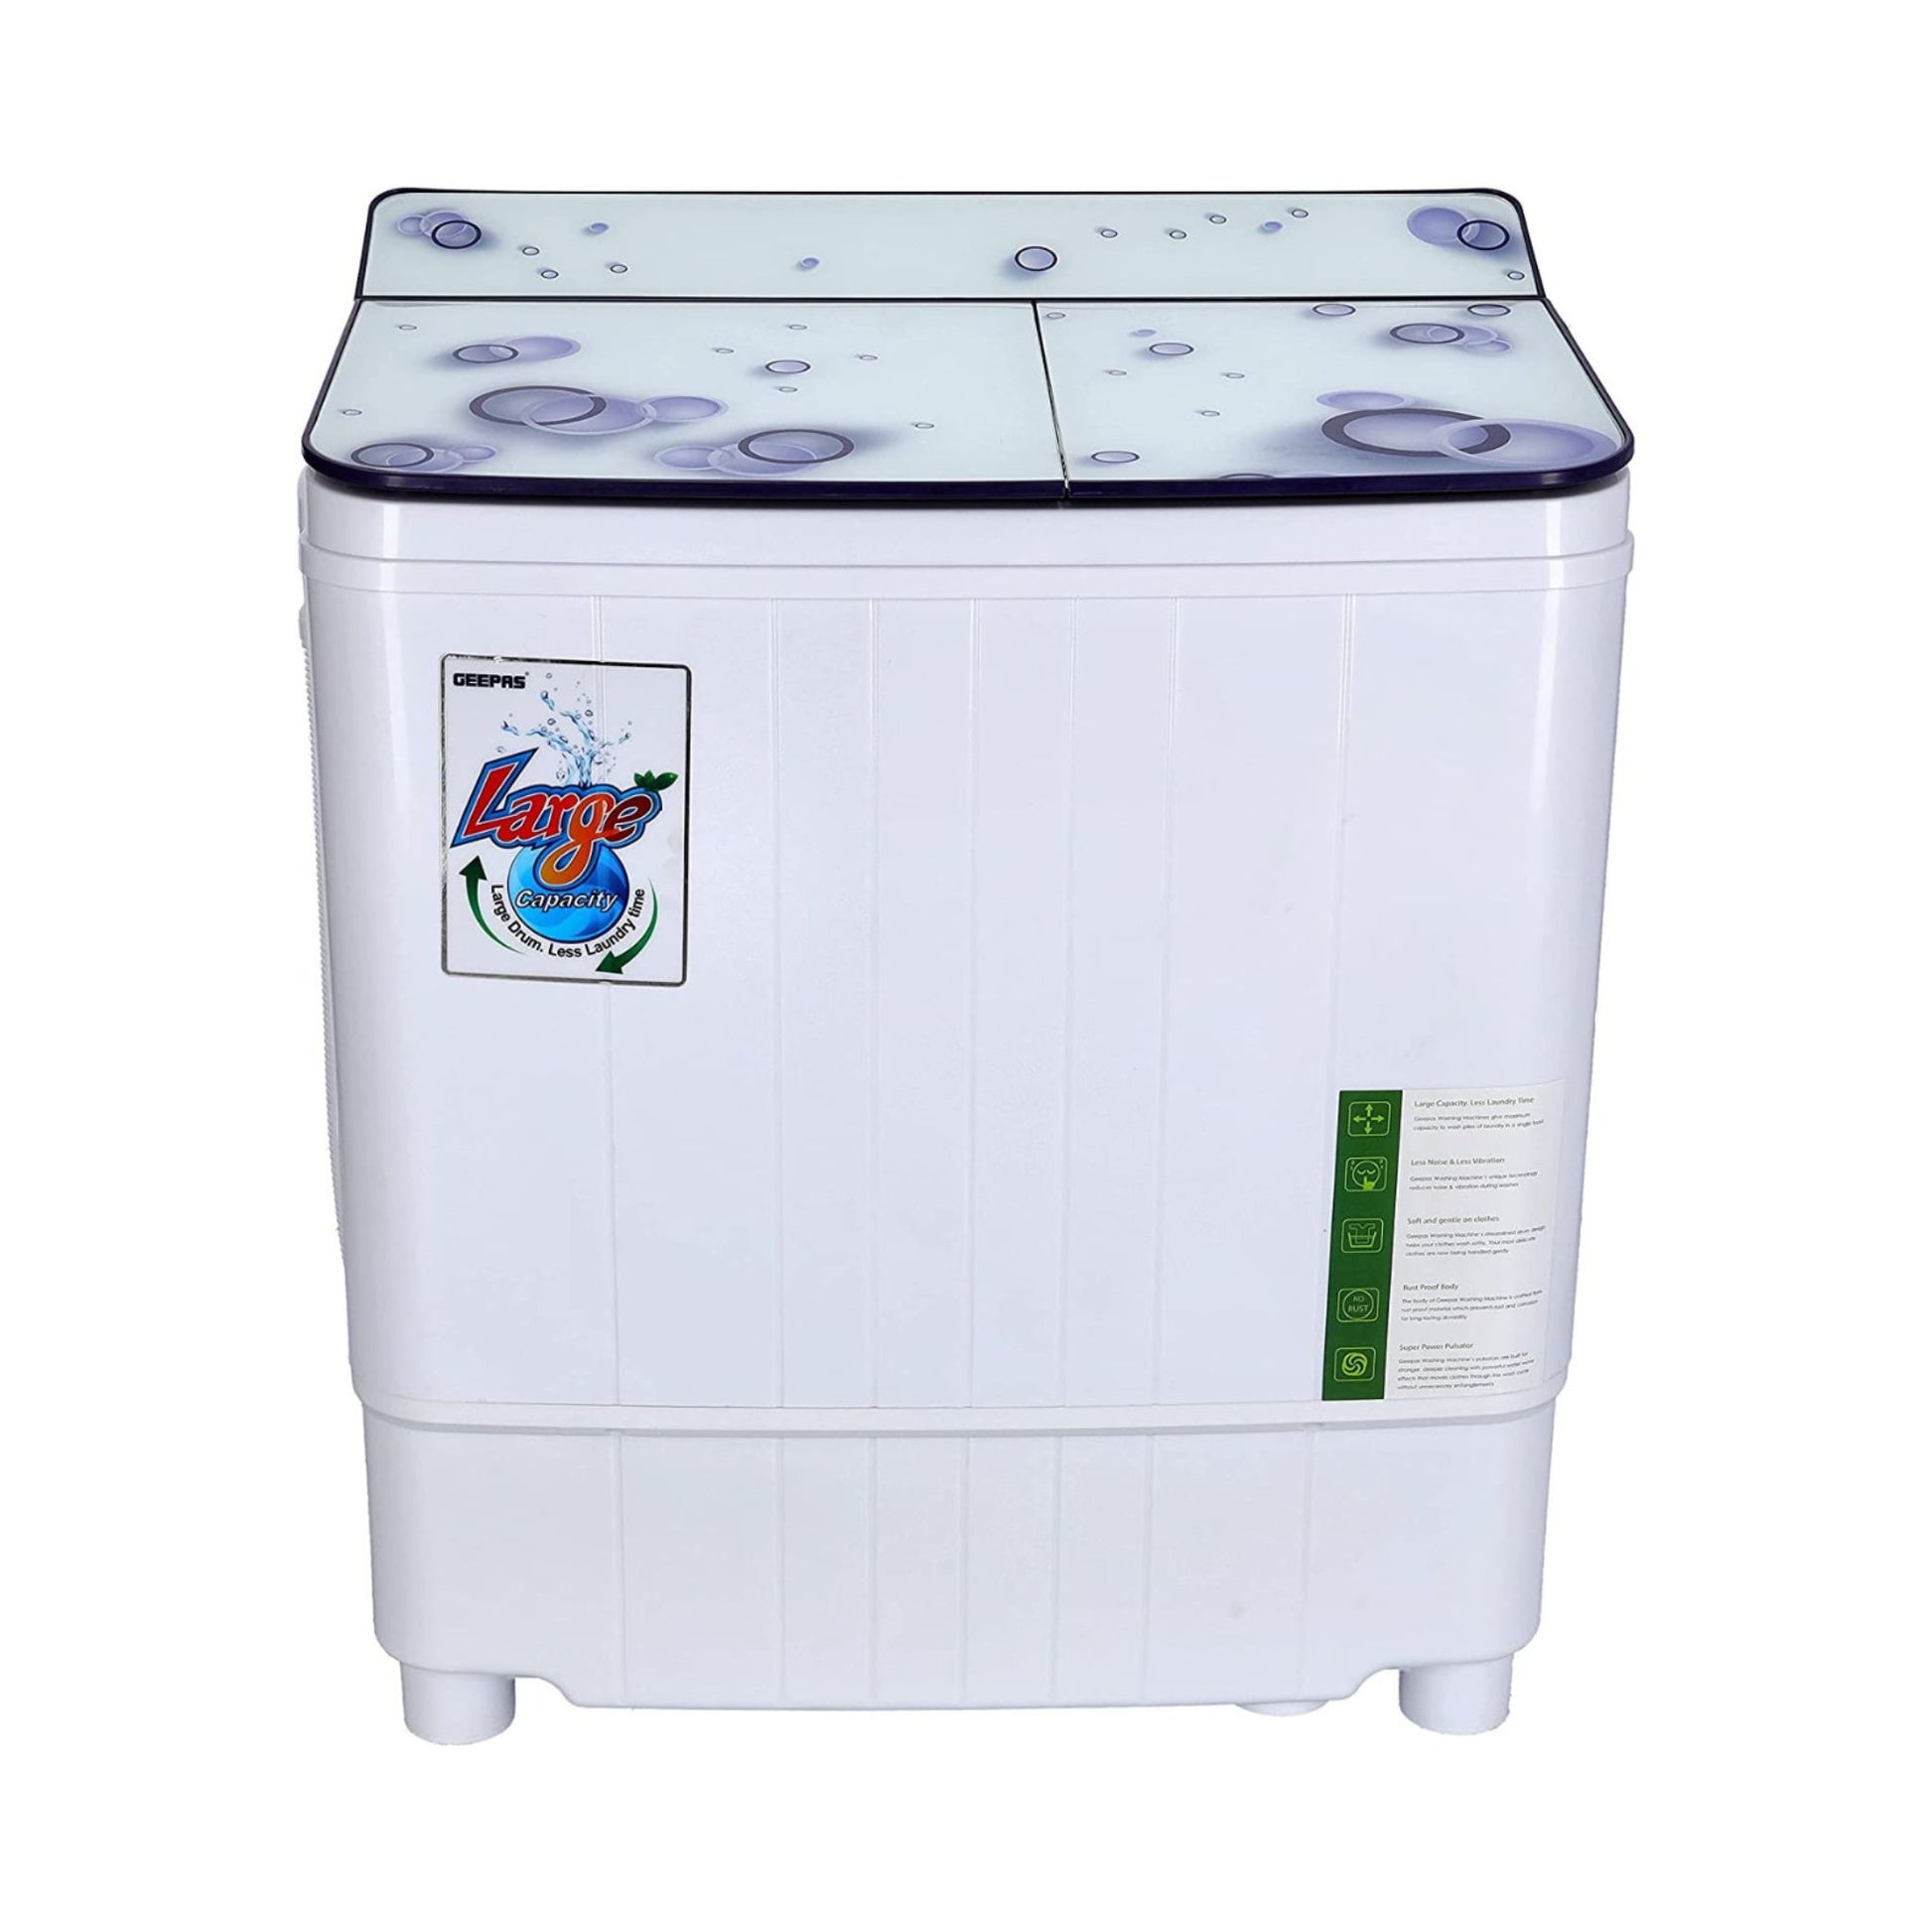 Geepas 3.5KG Semi Automatic Washing Machine, GSWM6473